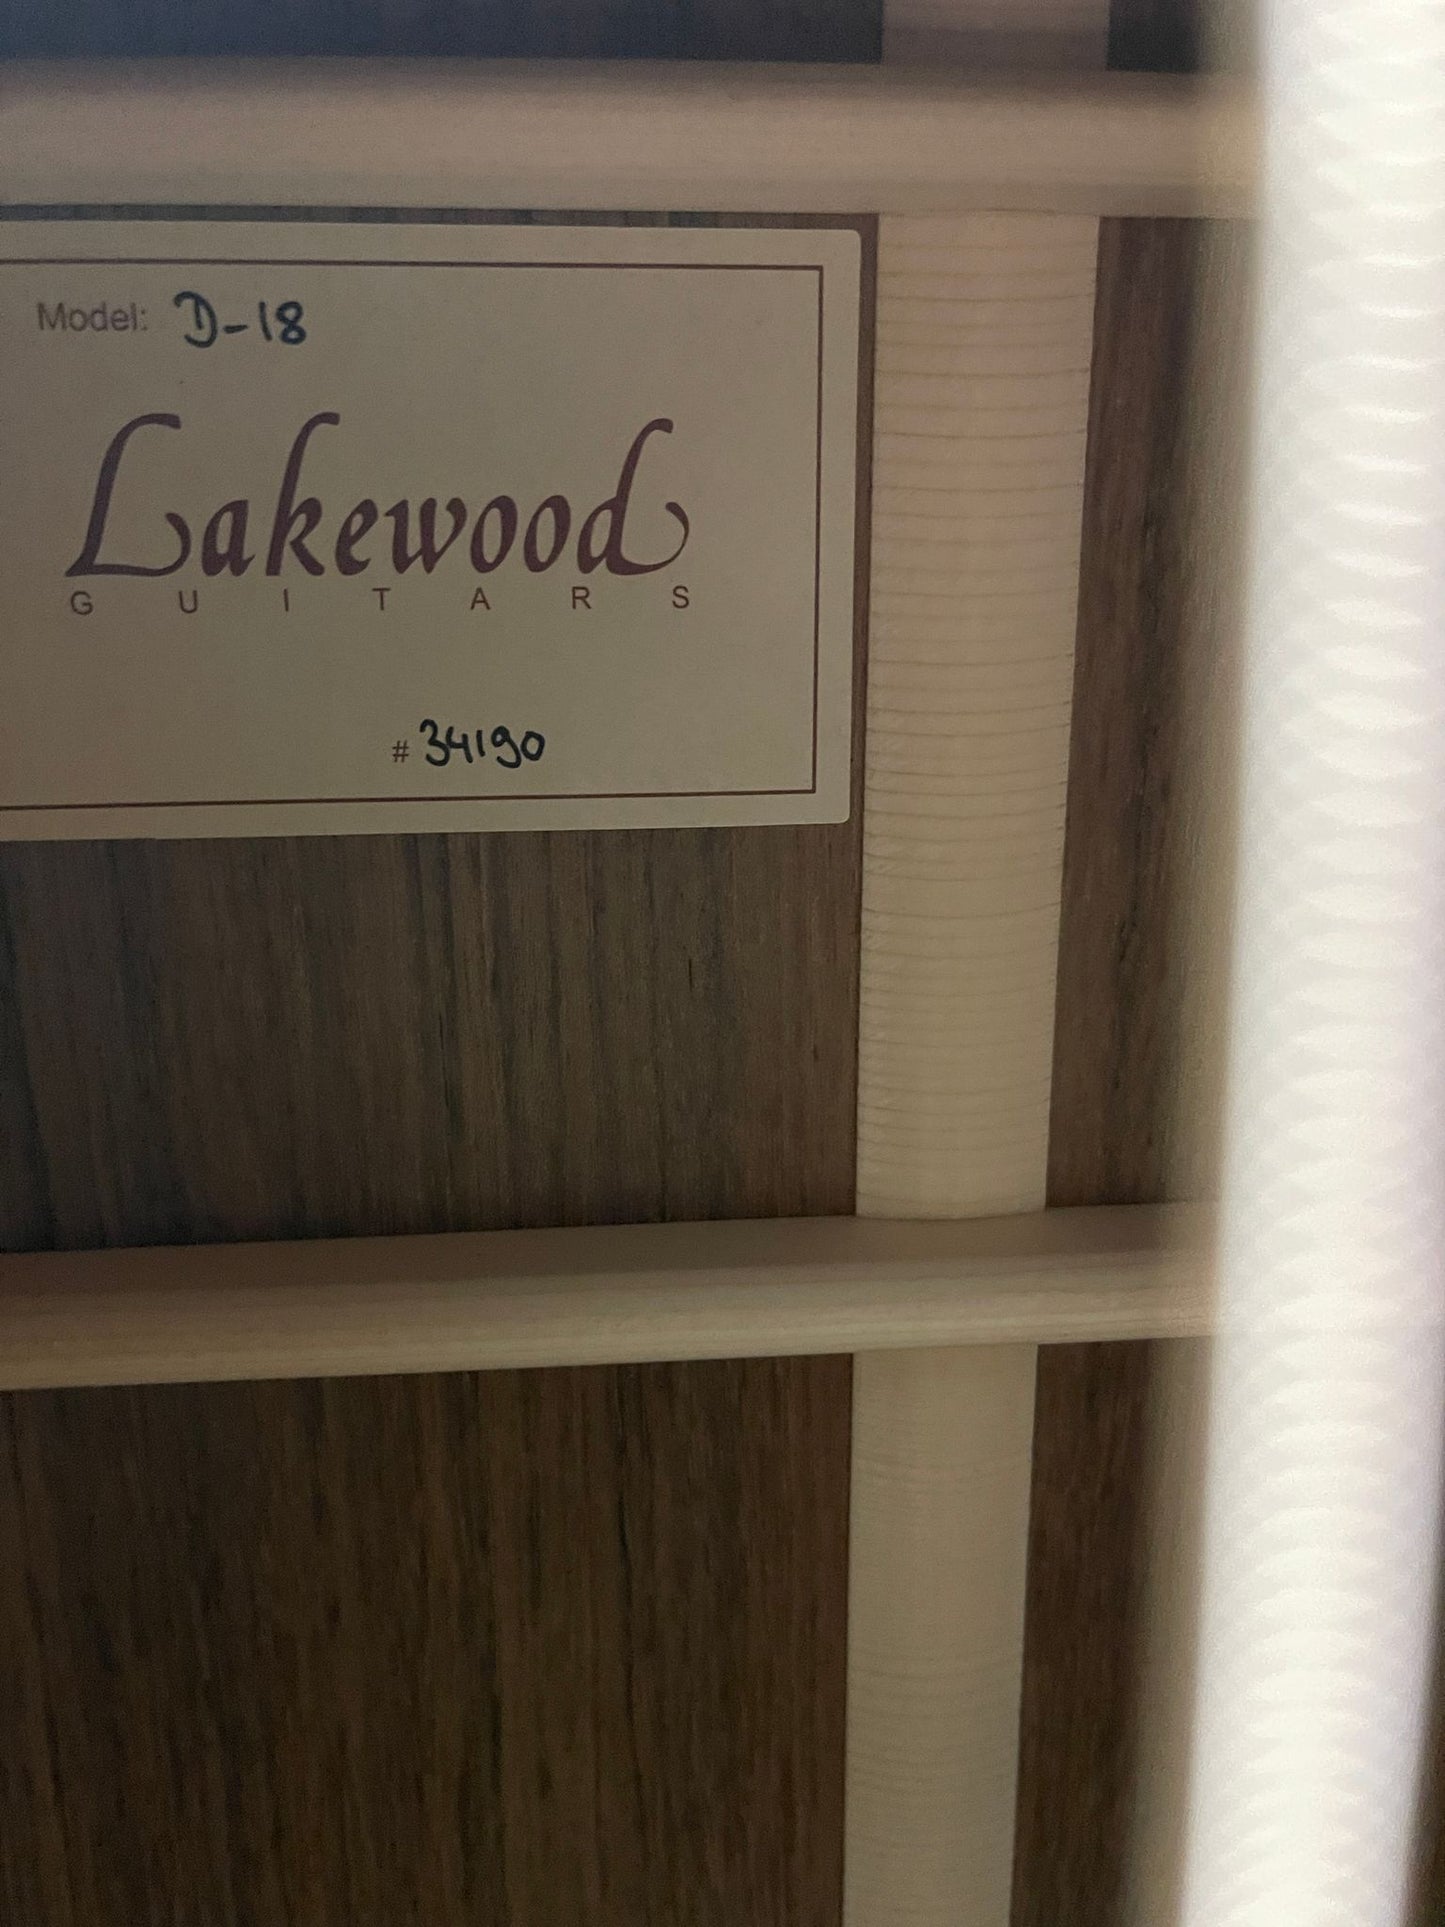 Lakewood D-18 #34190